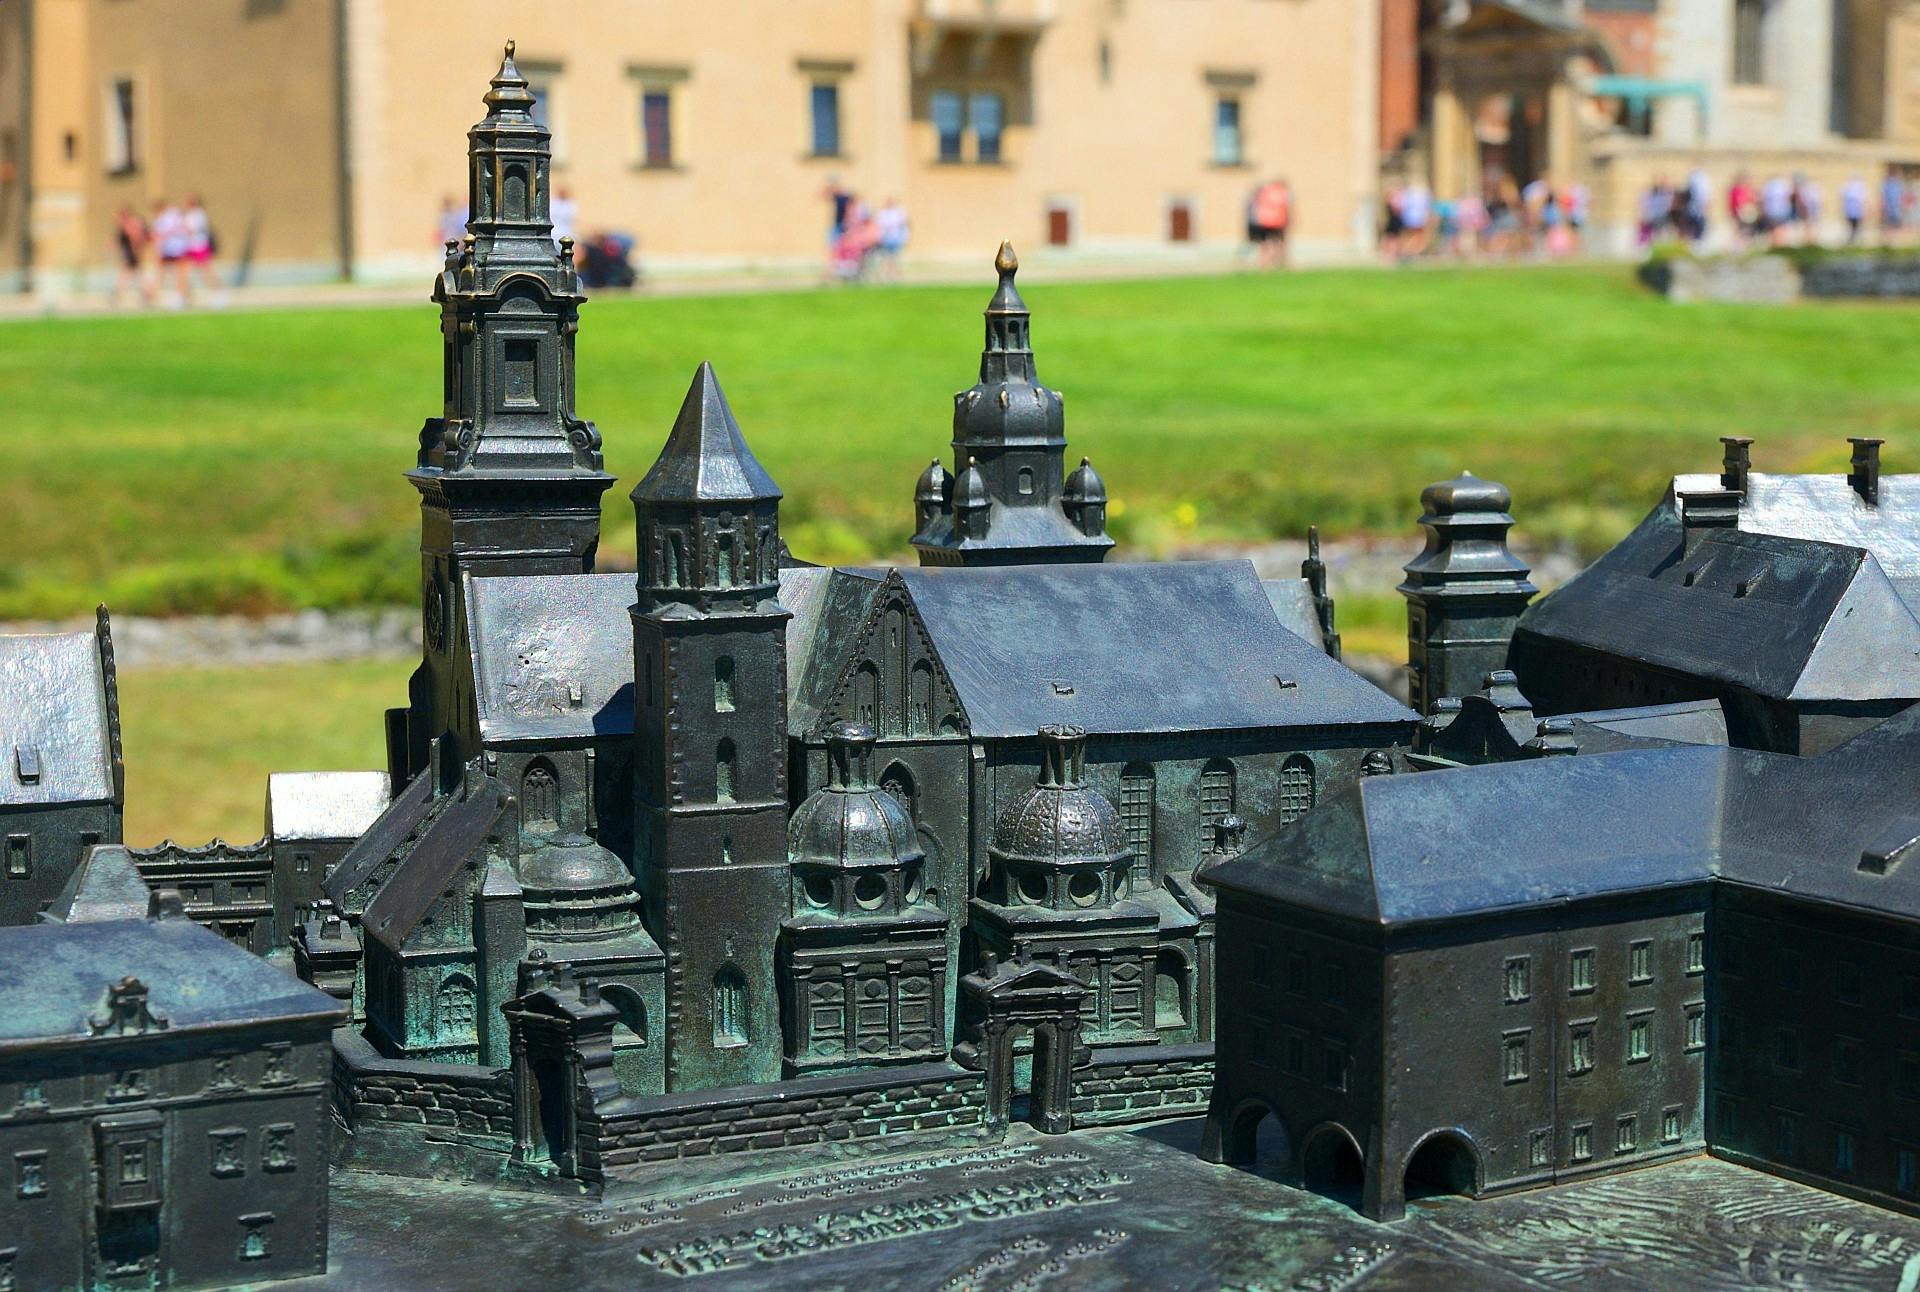 Polish Guided Tour to Wawel Castle Crown Treasury